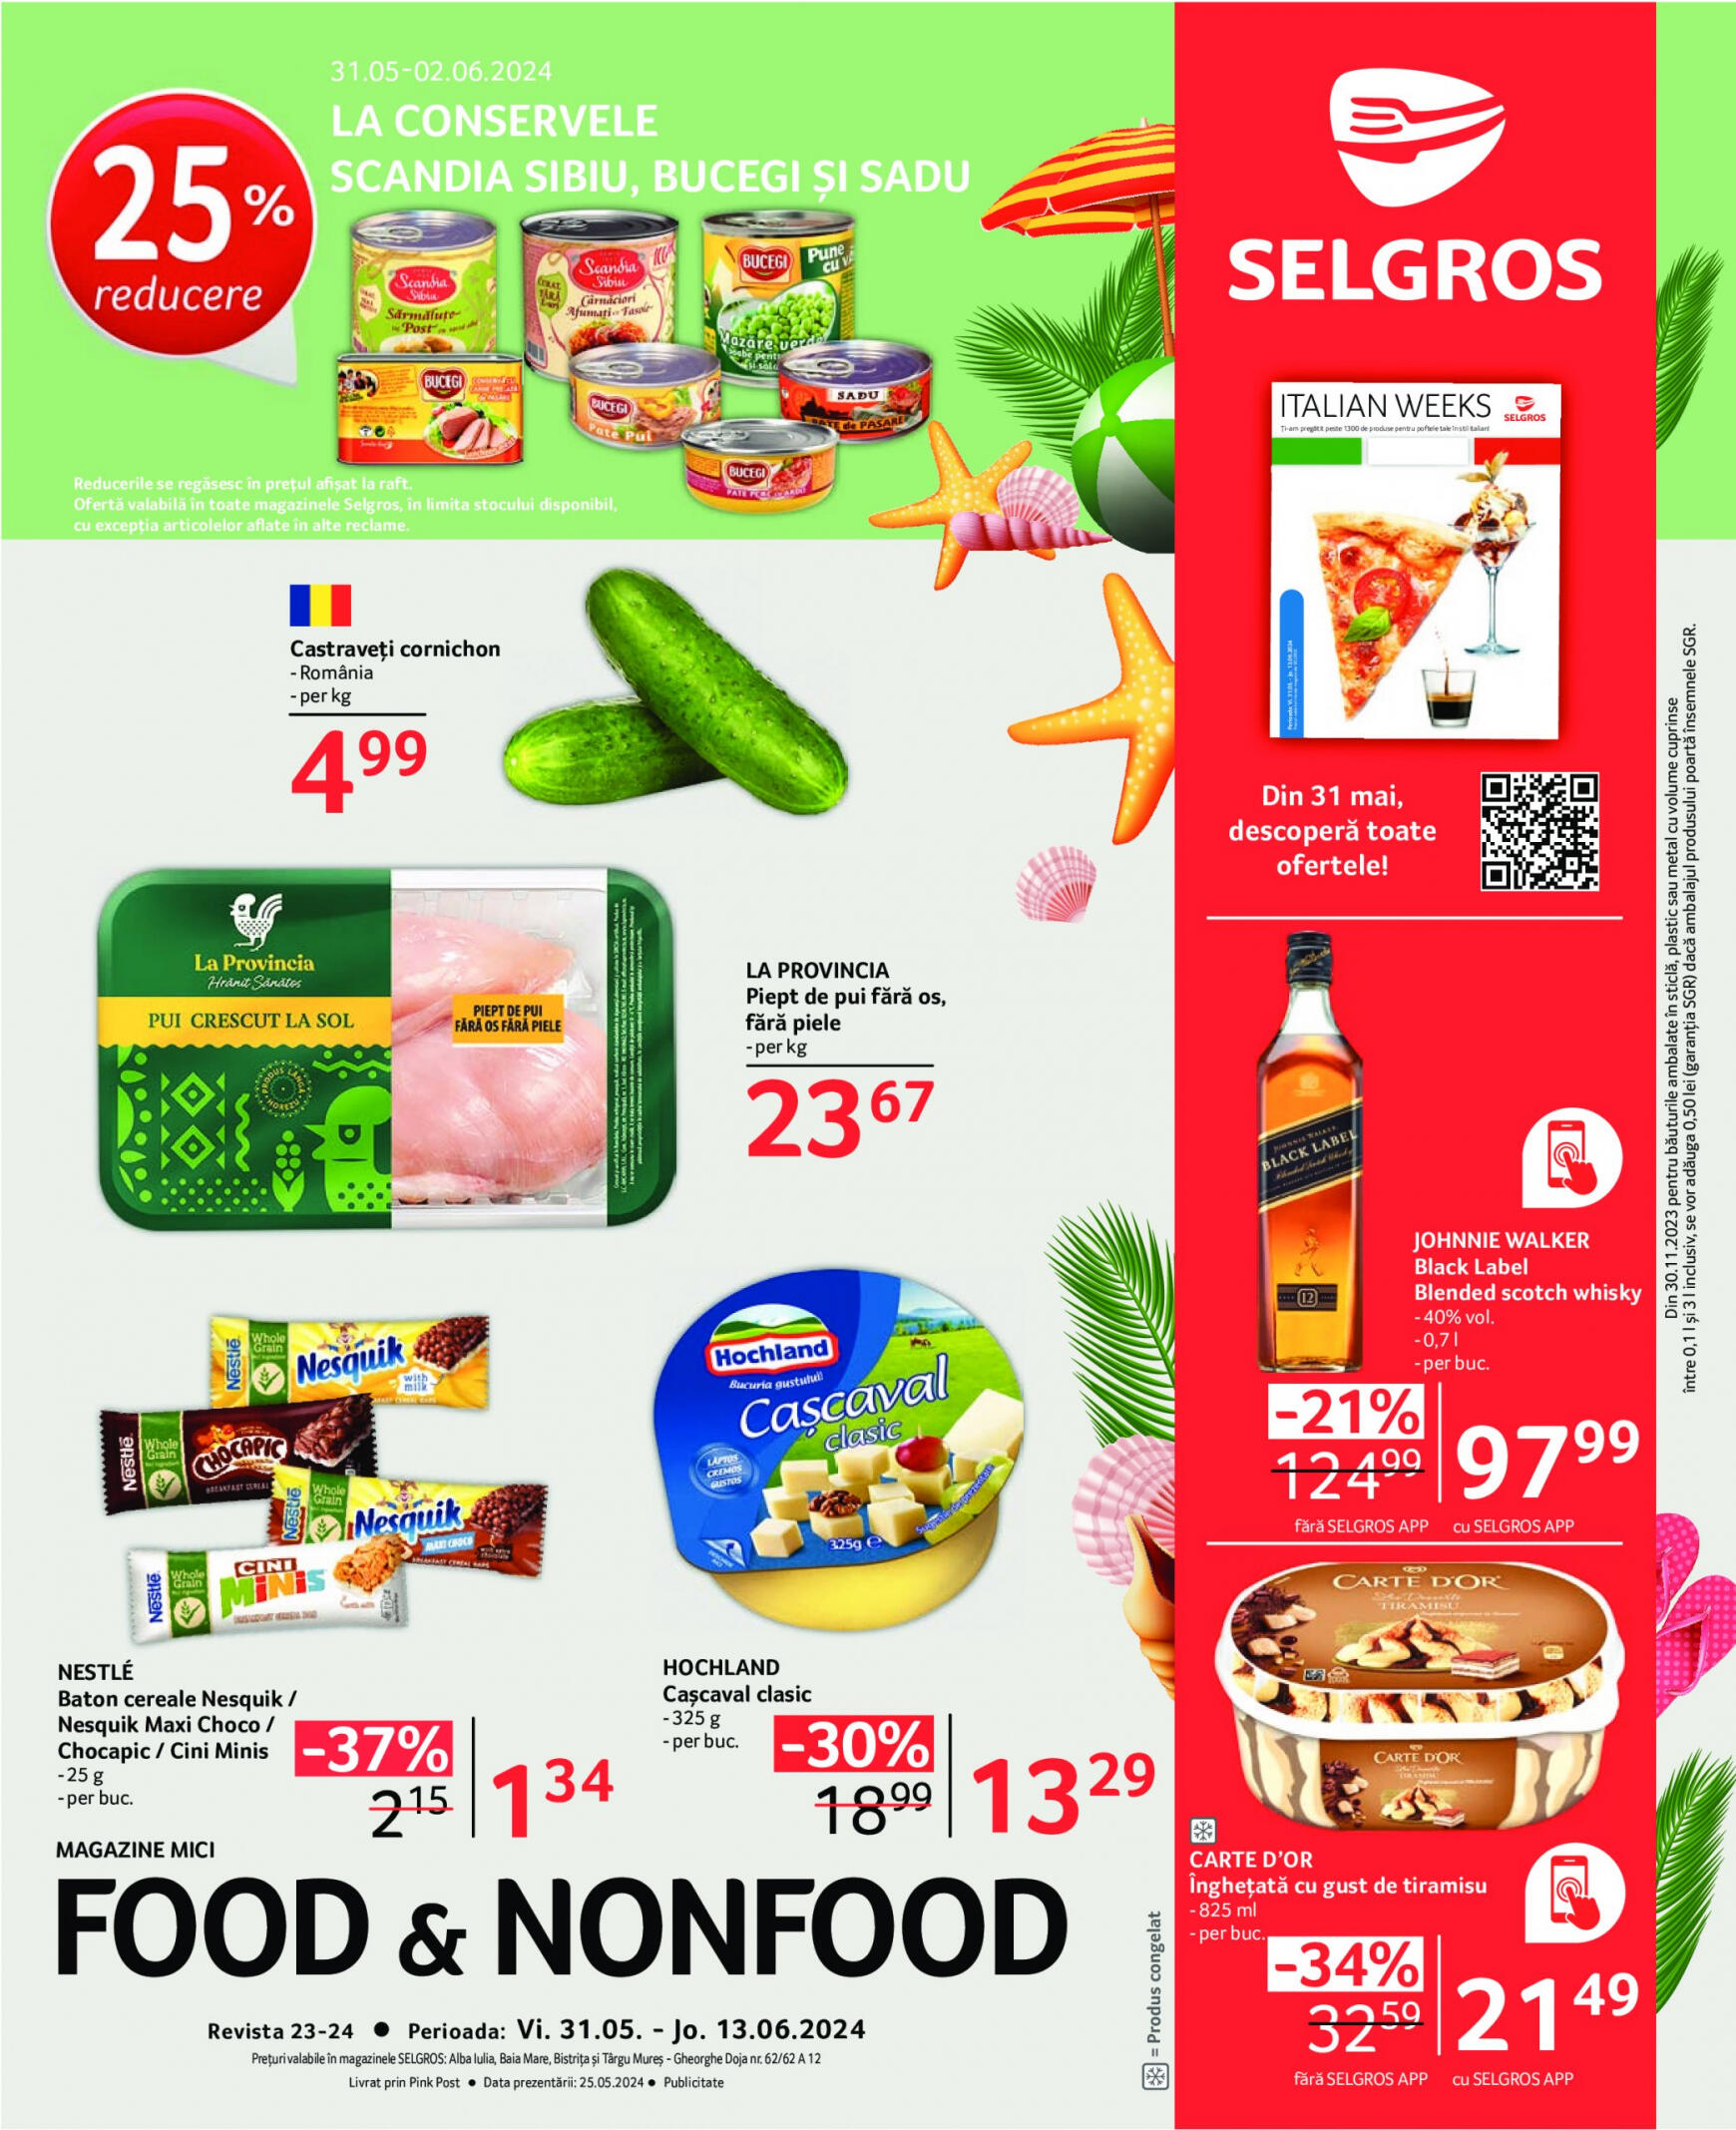 selgros - Catalog nou Selgros - Food & Nonfood 31.05. - 13.06. - page: 1